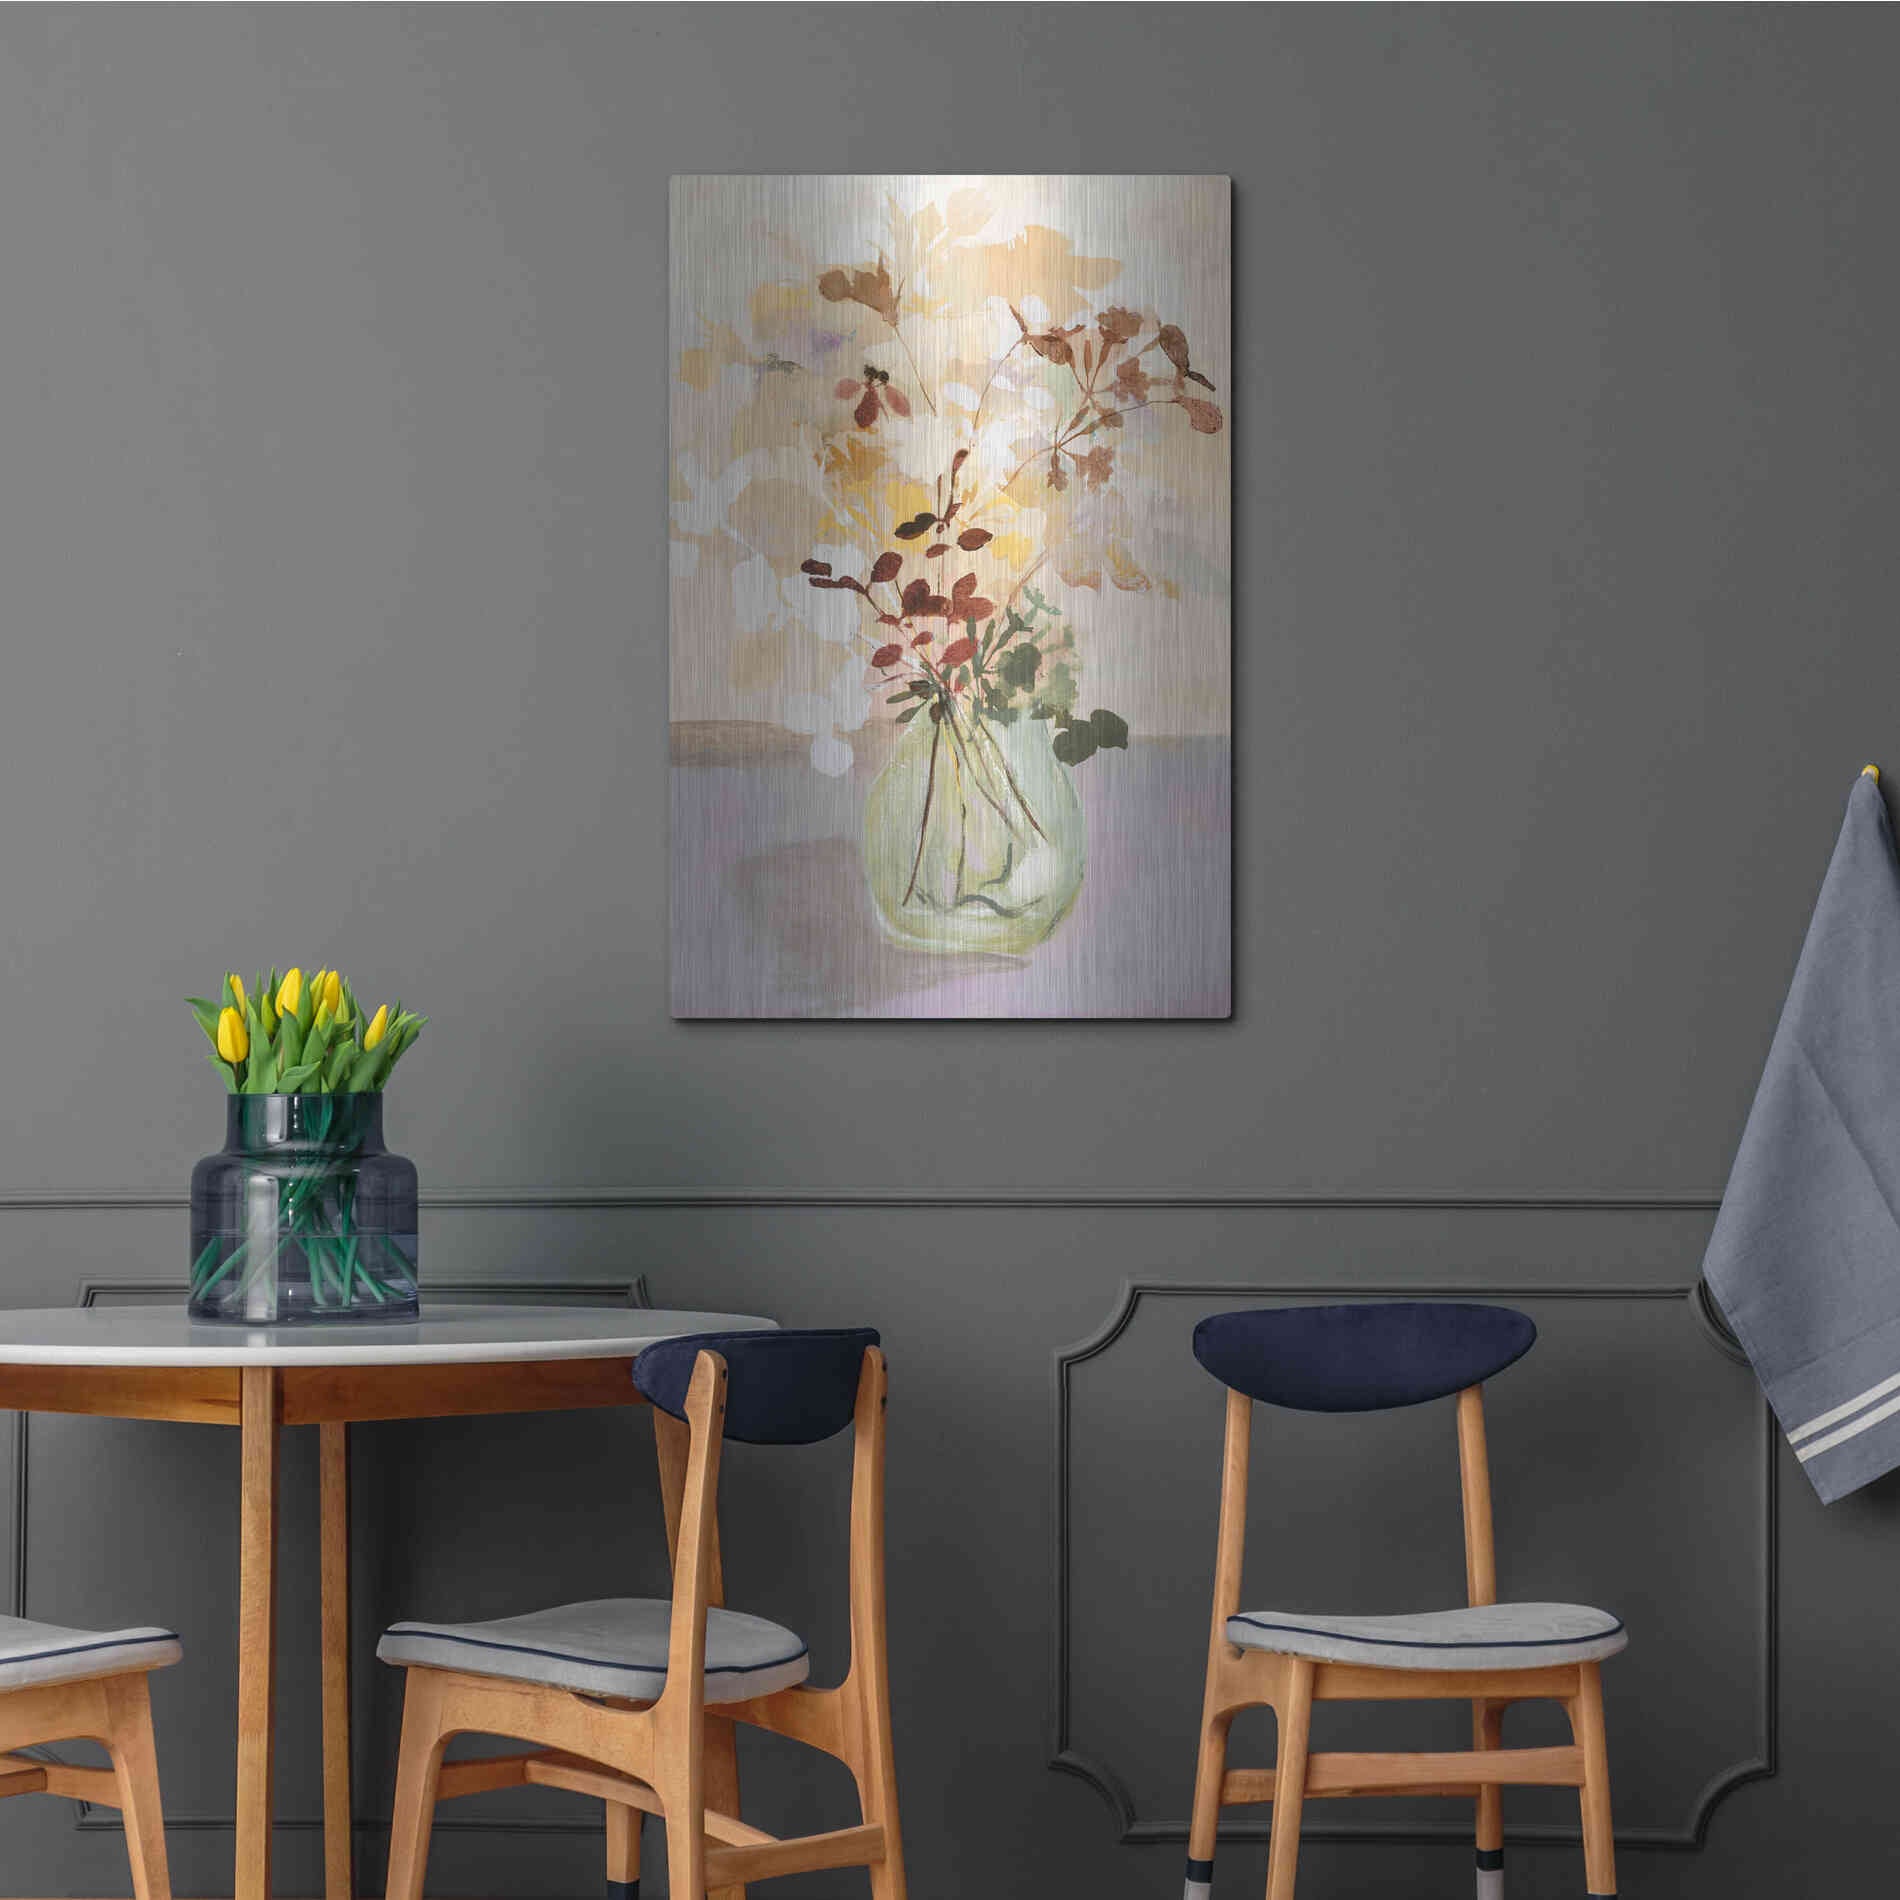 Luxe Metal Art 'Pastel Flower 2' by Design Fabrikken, Metal Wall Art,24x36